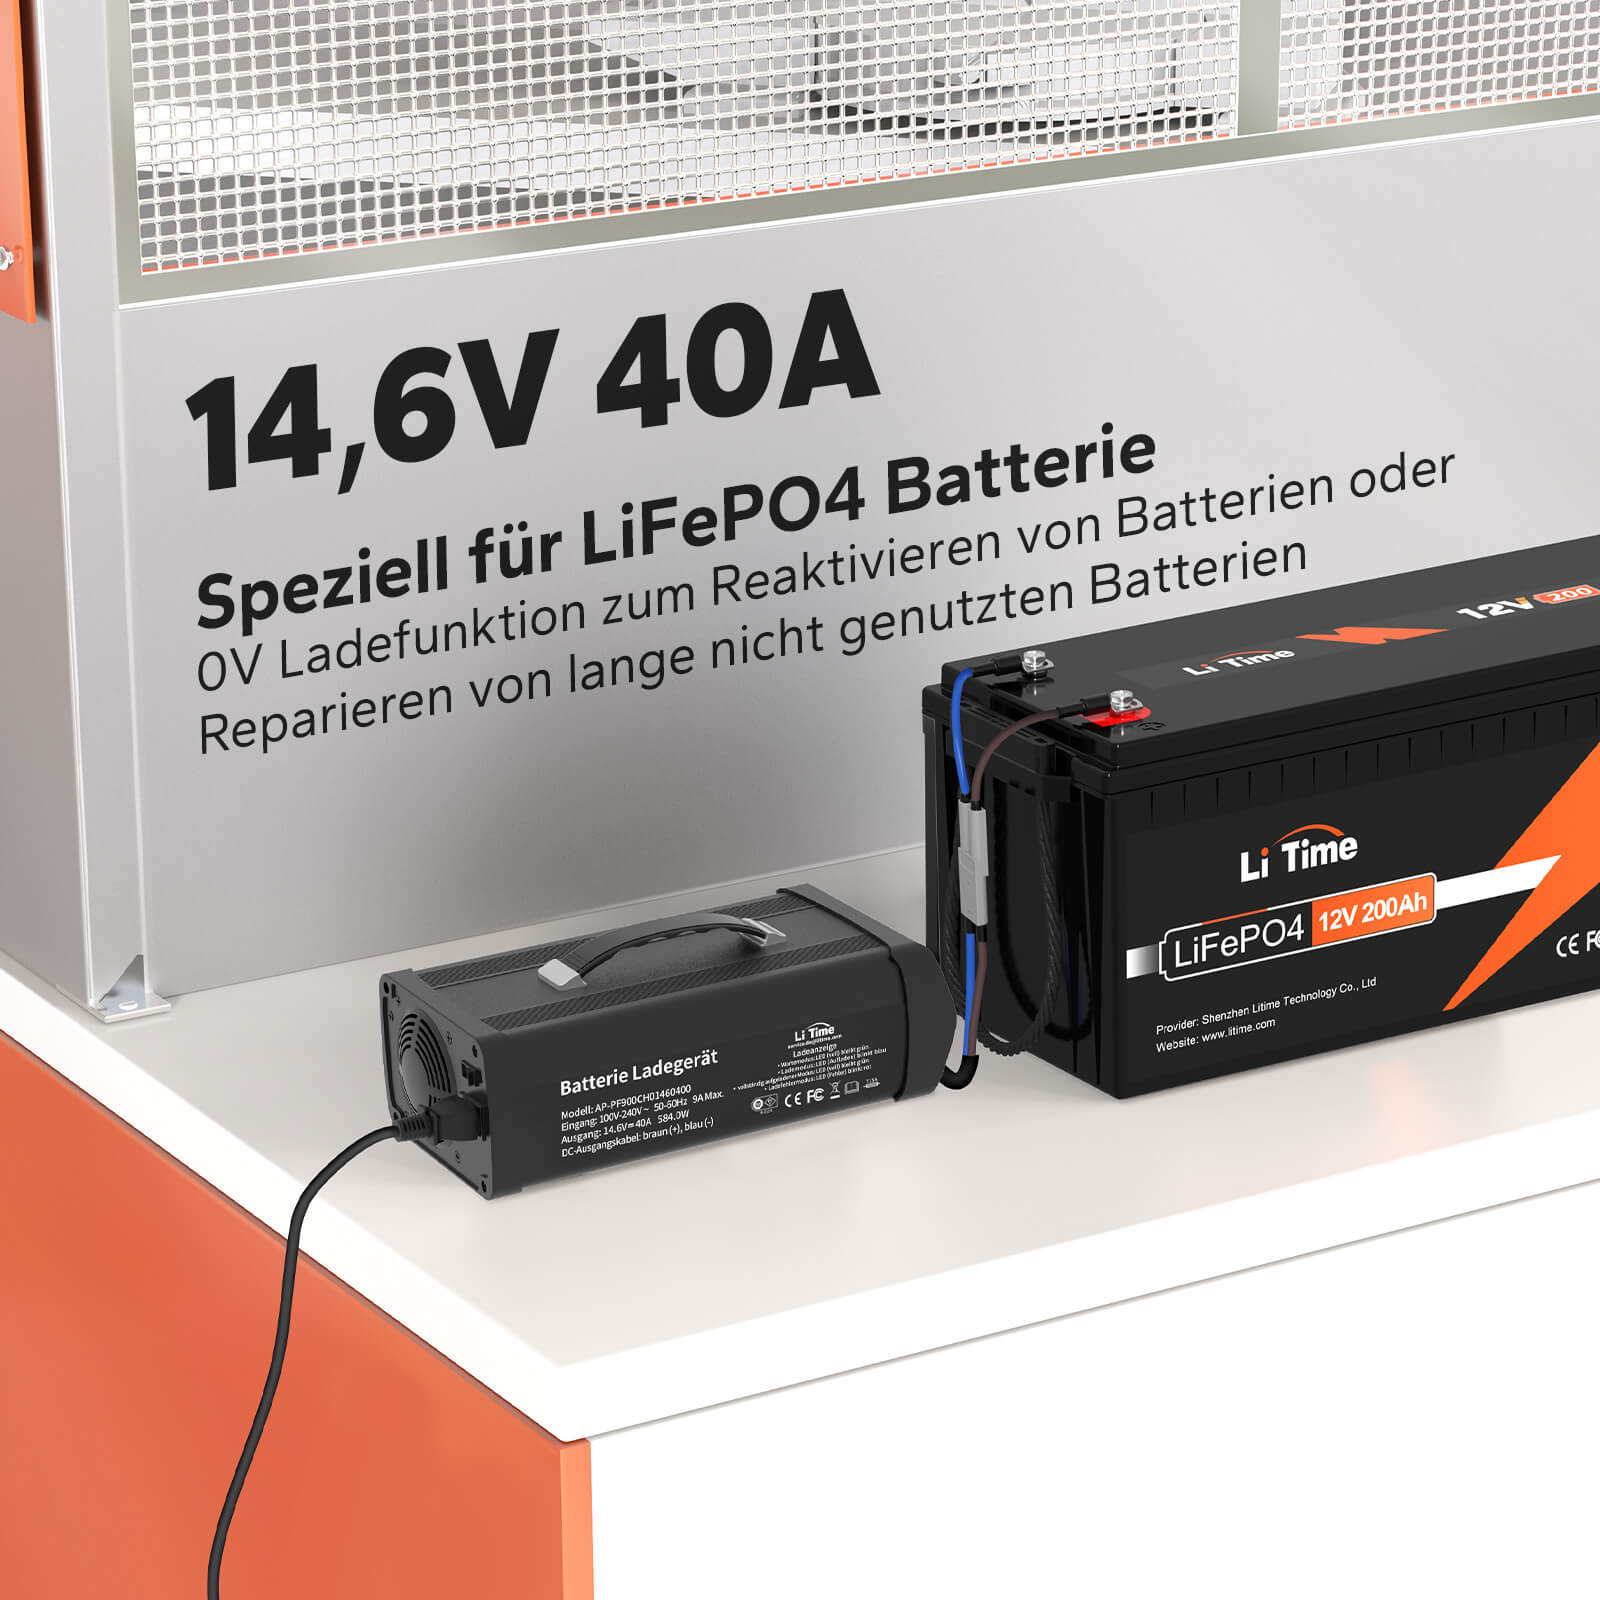 LiTime 14.6V 40A Lithium Batterieladegerät für 12V LiFePO4 Lithium